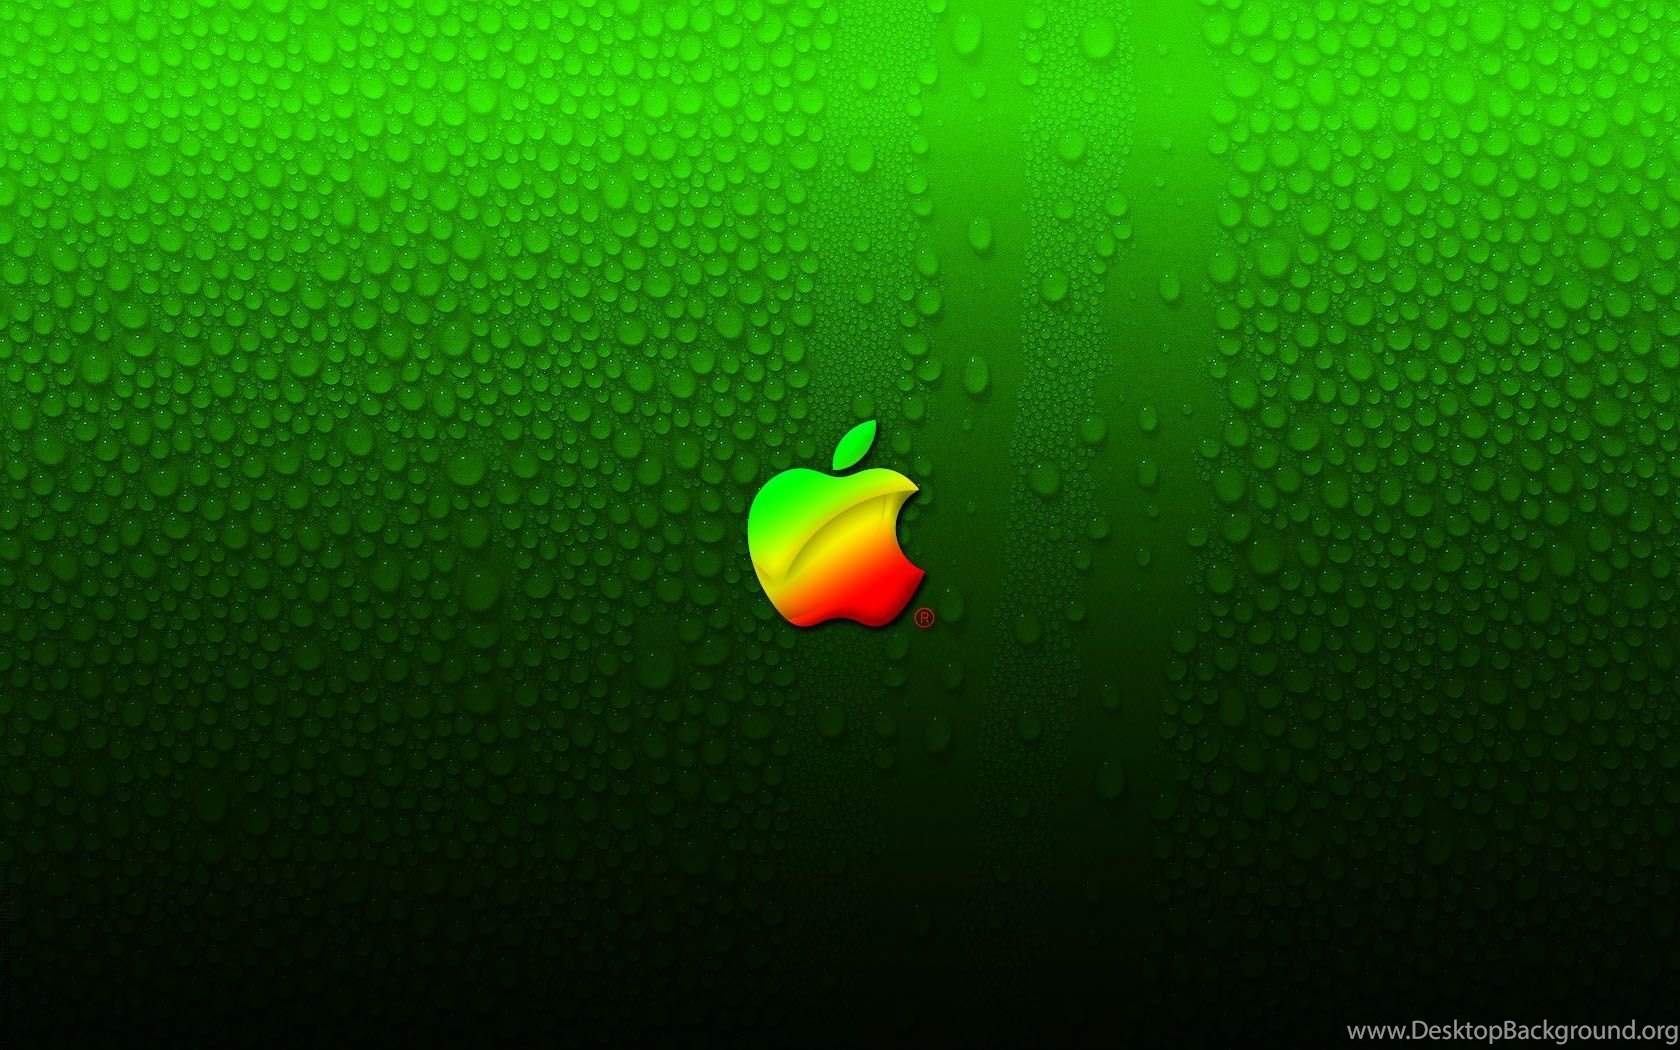 Top Apple Wallpapers 1680x1050 Images For Pinterest Desktop Background